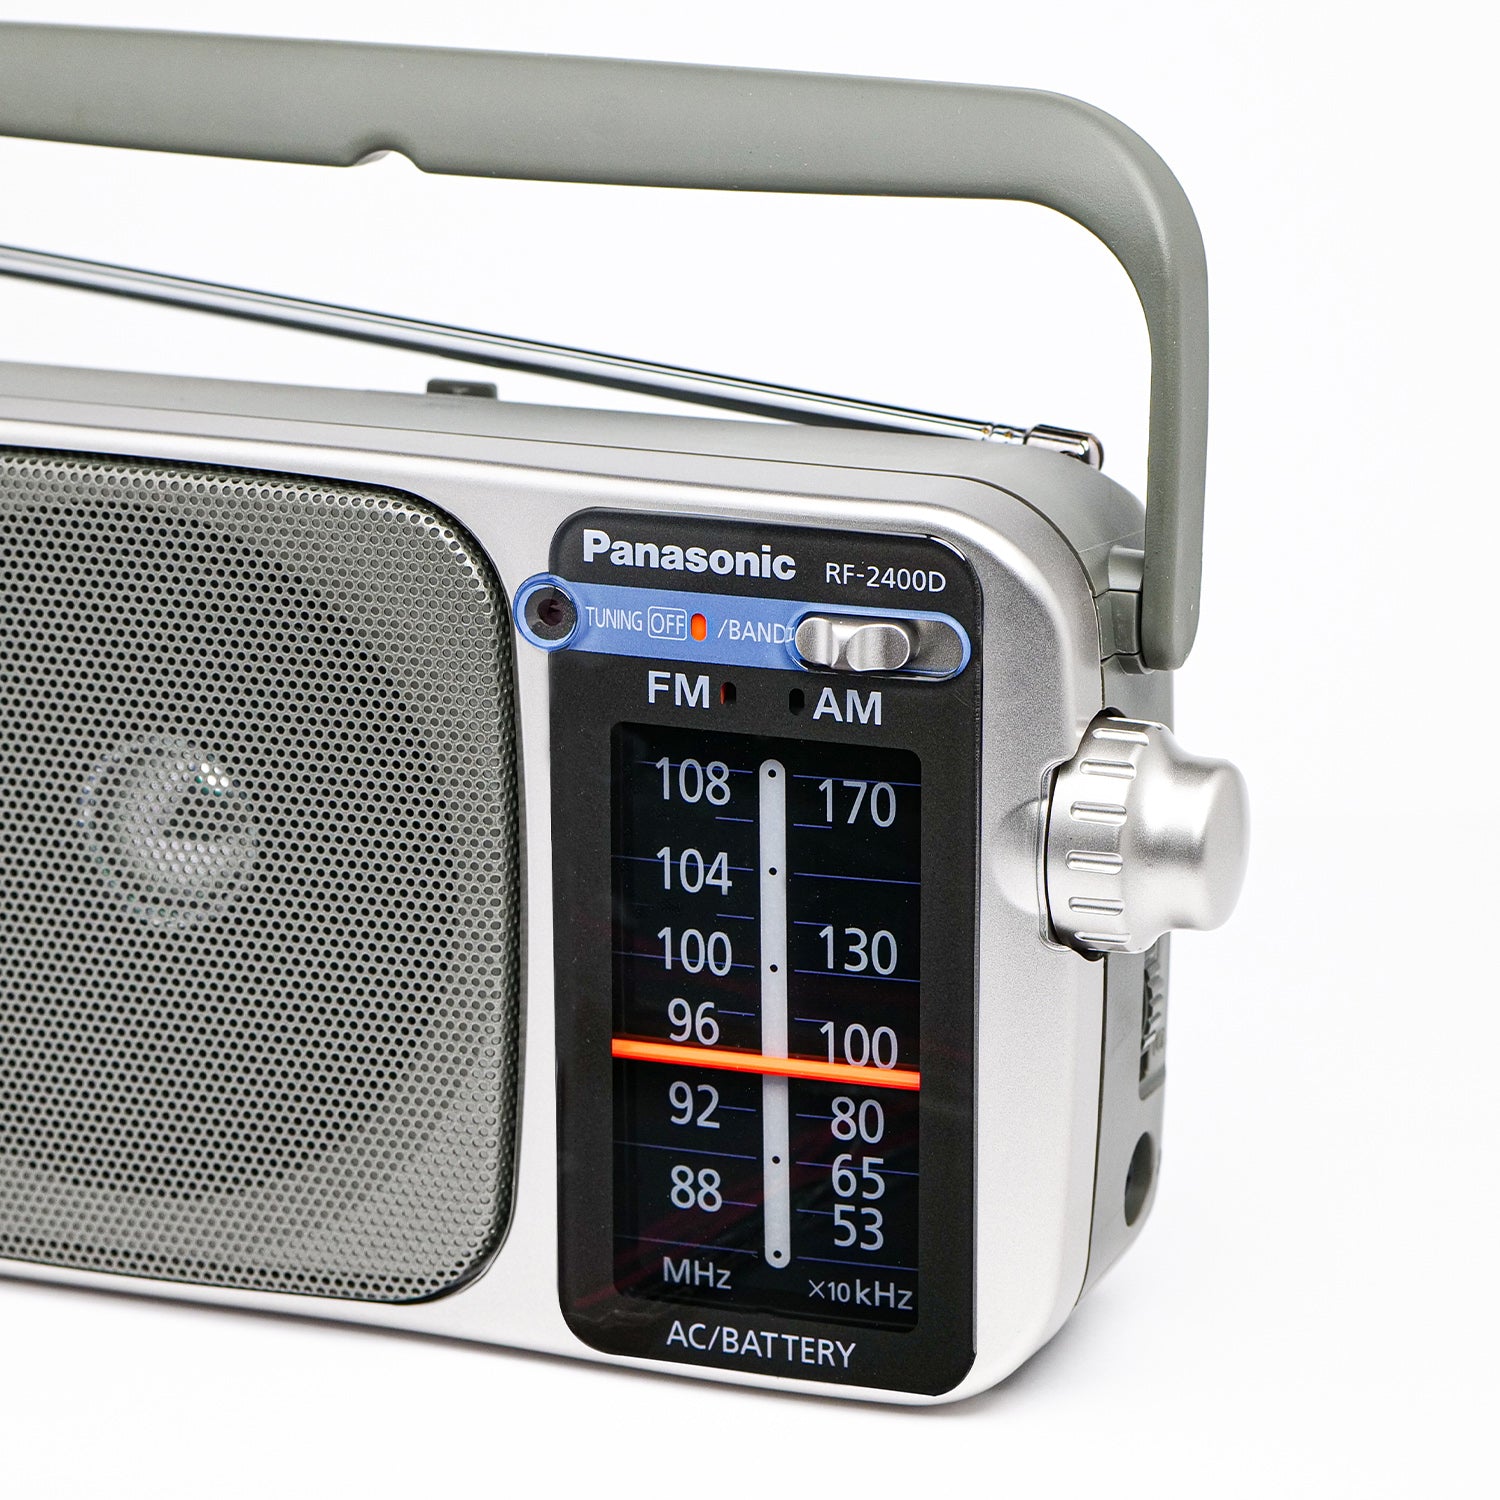 Panasonic Rf-2400D Am/FM Radio, Silver/Grey : Electronics 